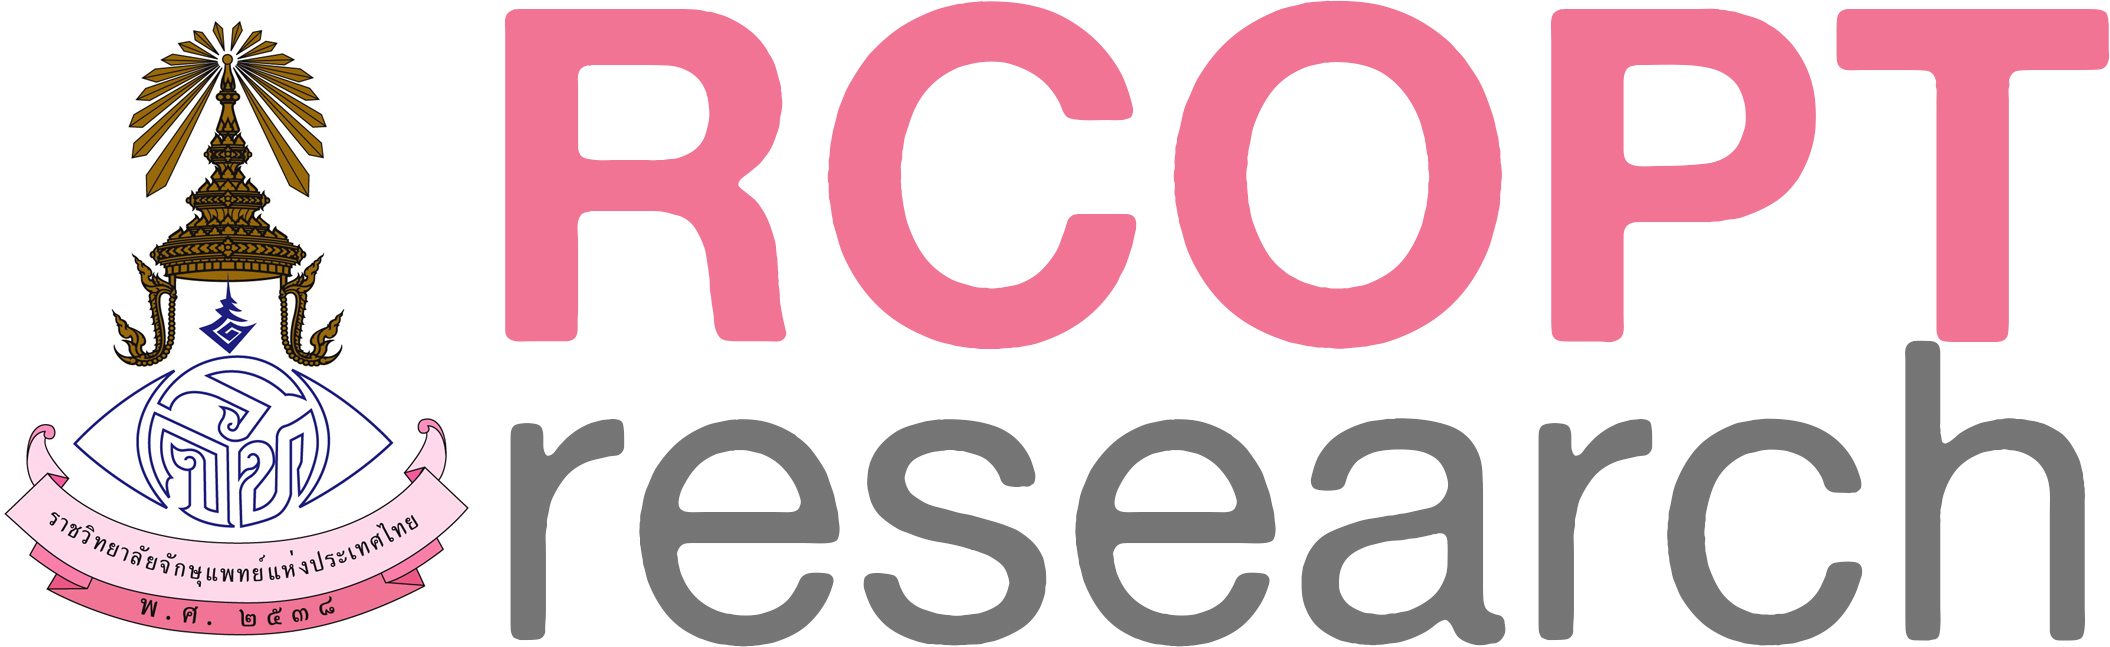 2115RCOPT research logo1.jpg